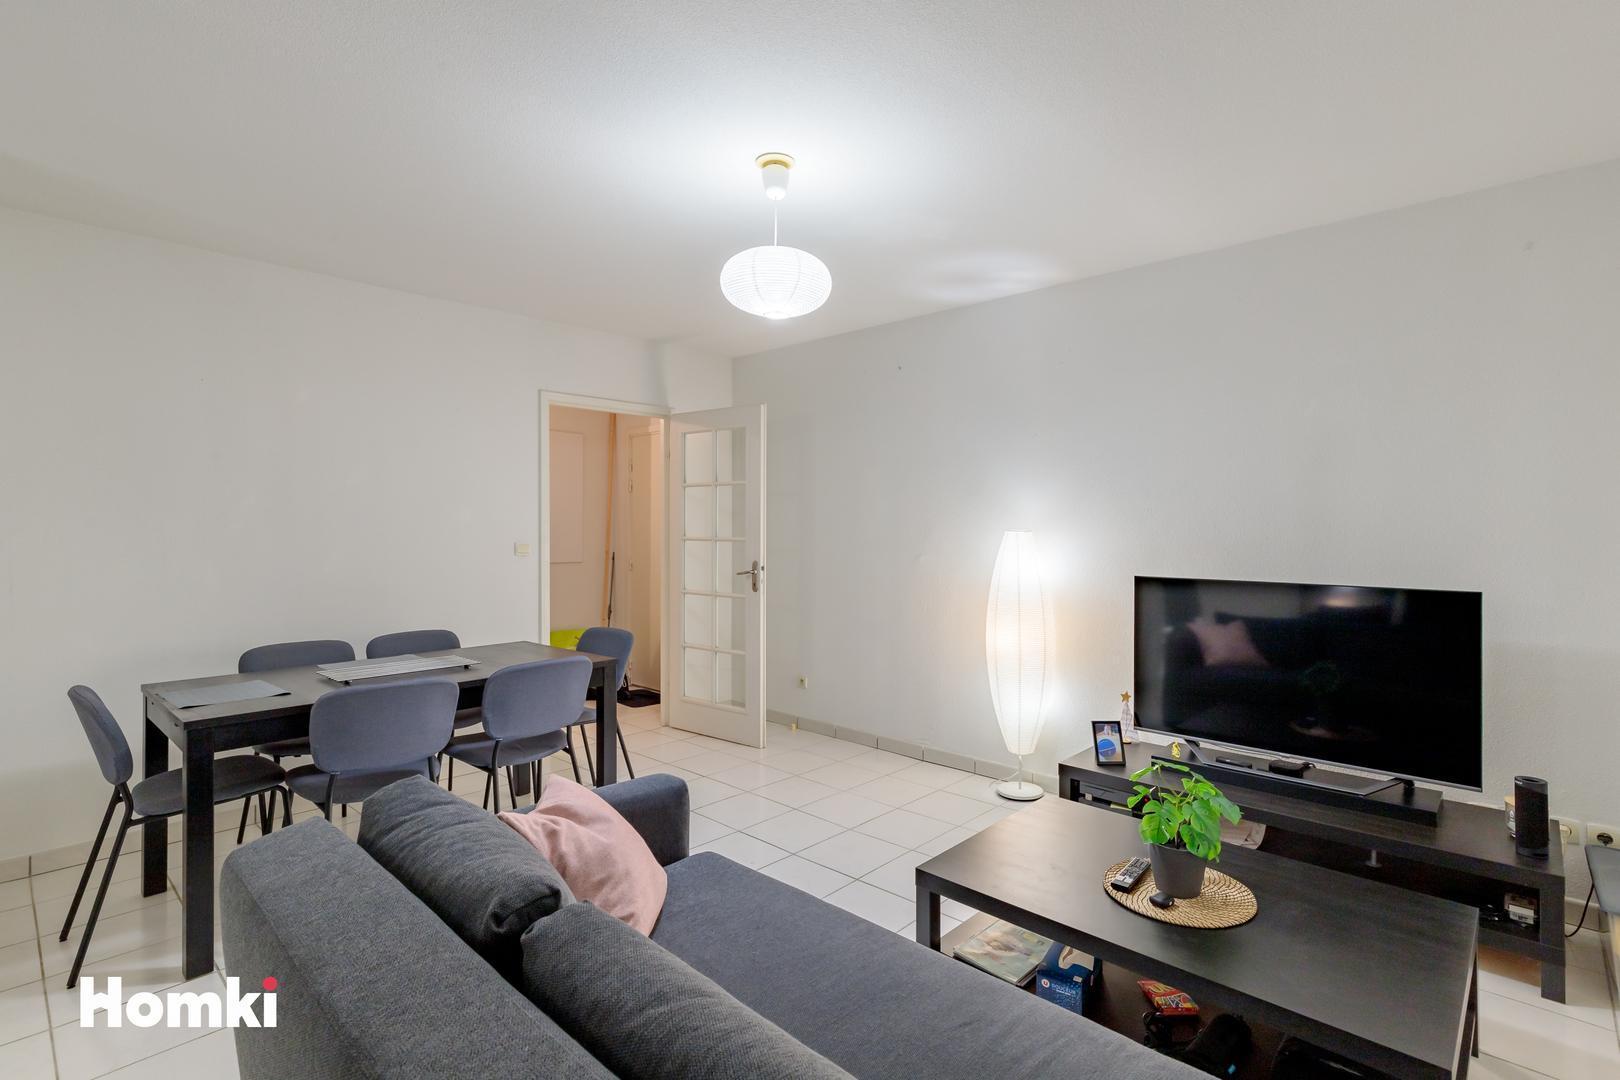 Homki - Vente Appartement  de 60.0 m² à Gardouch 31290